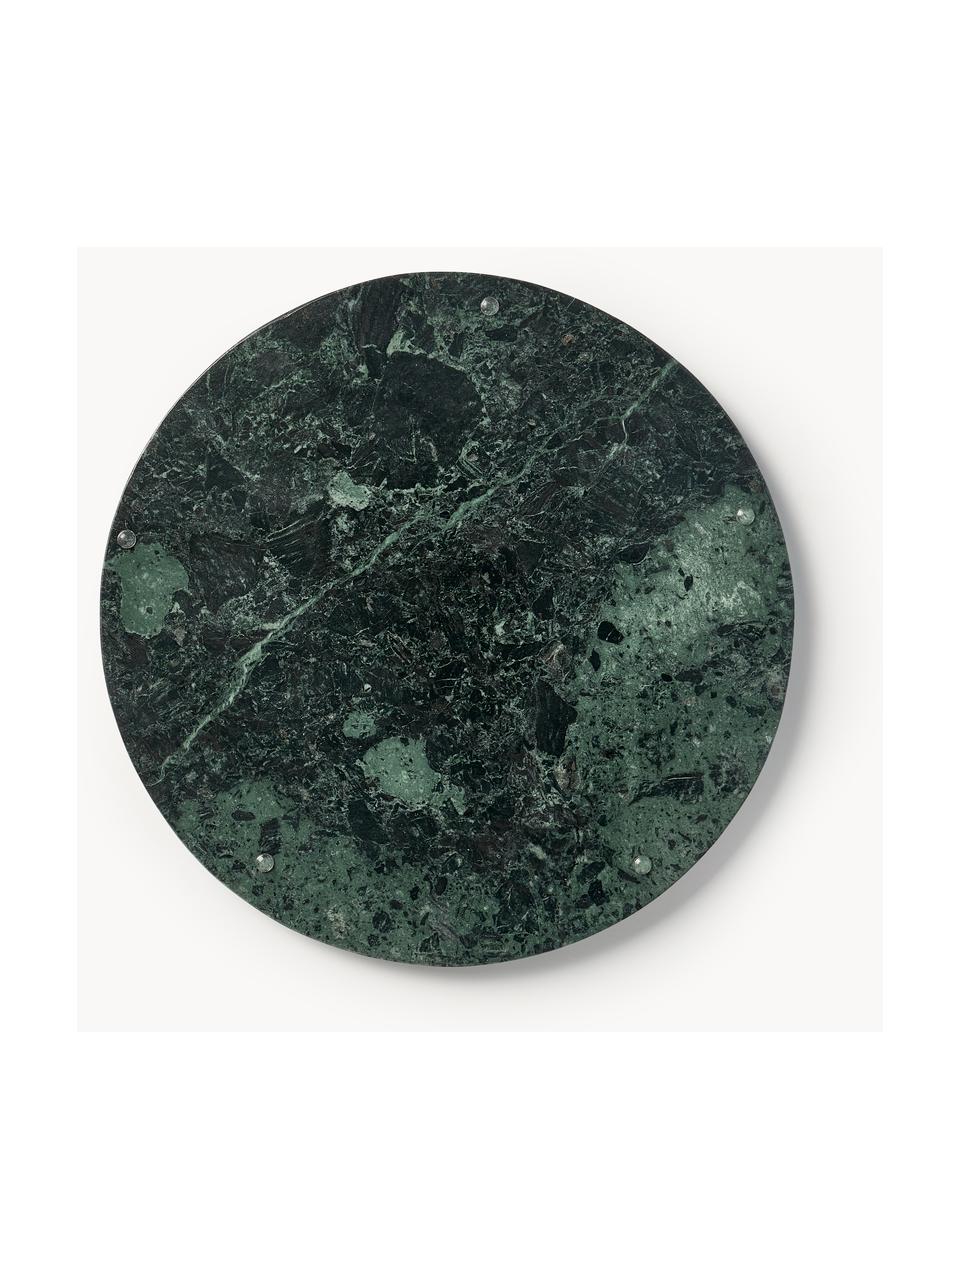 Plat de service en marbre Aika, Ø 30 cm, Marbre, Vert, marbré, Ø 30 cm